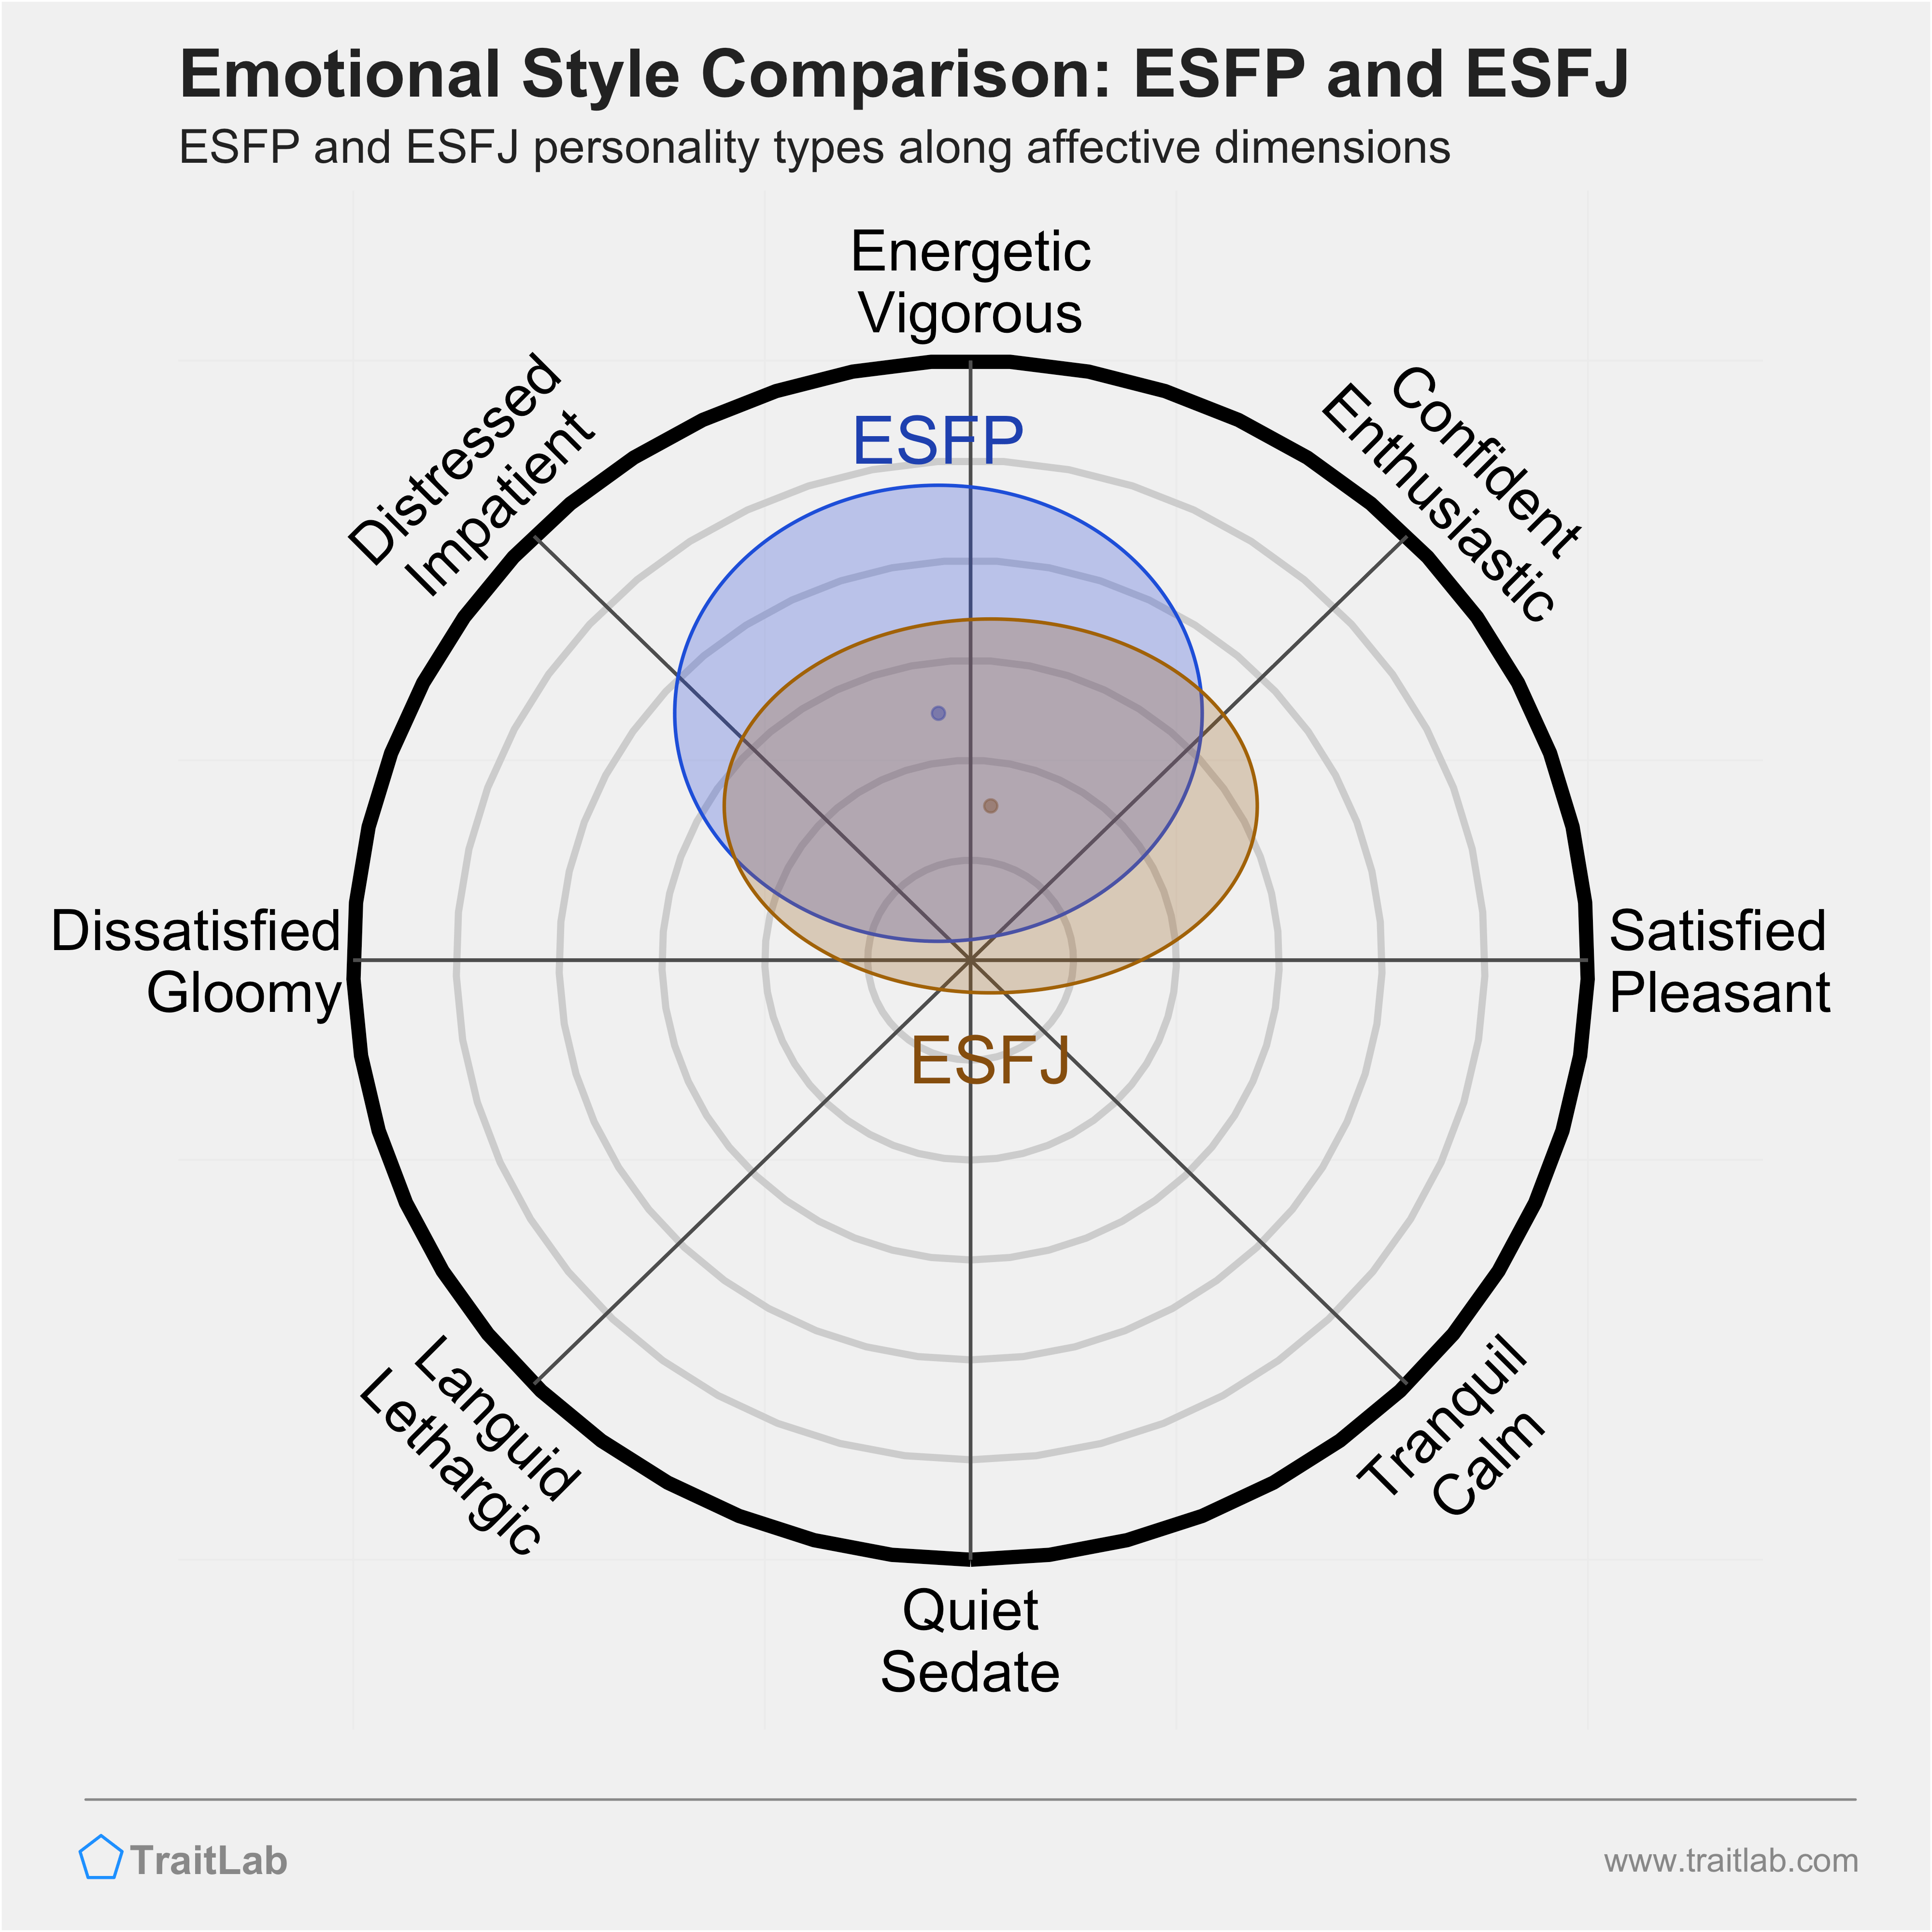 ESFP and ESFJ comparison across emotional (affective) dimensions